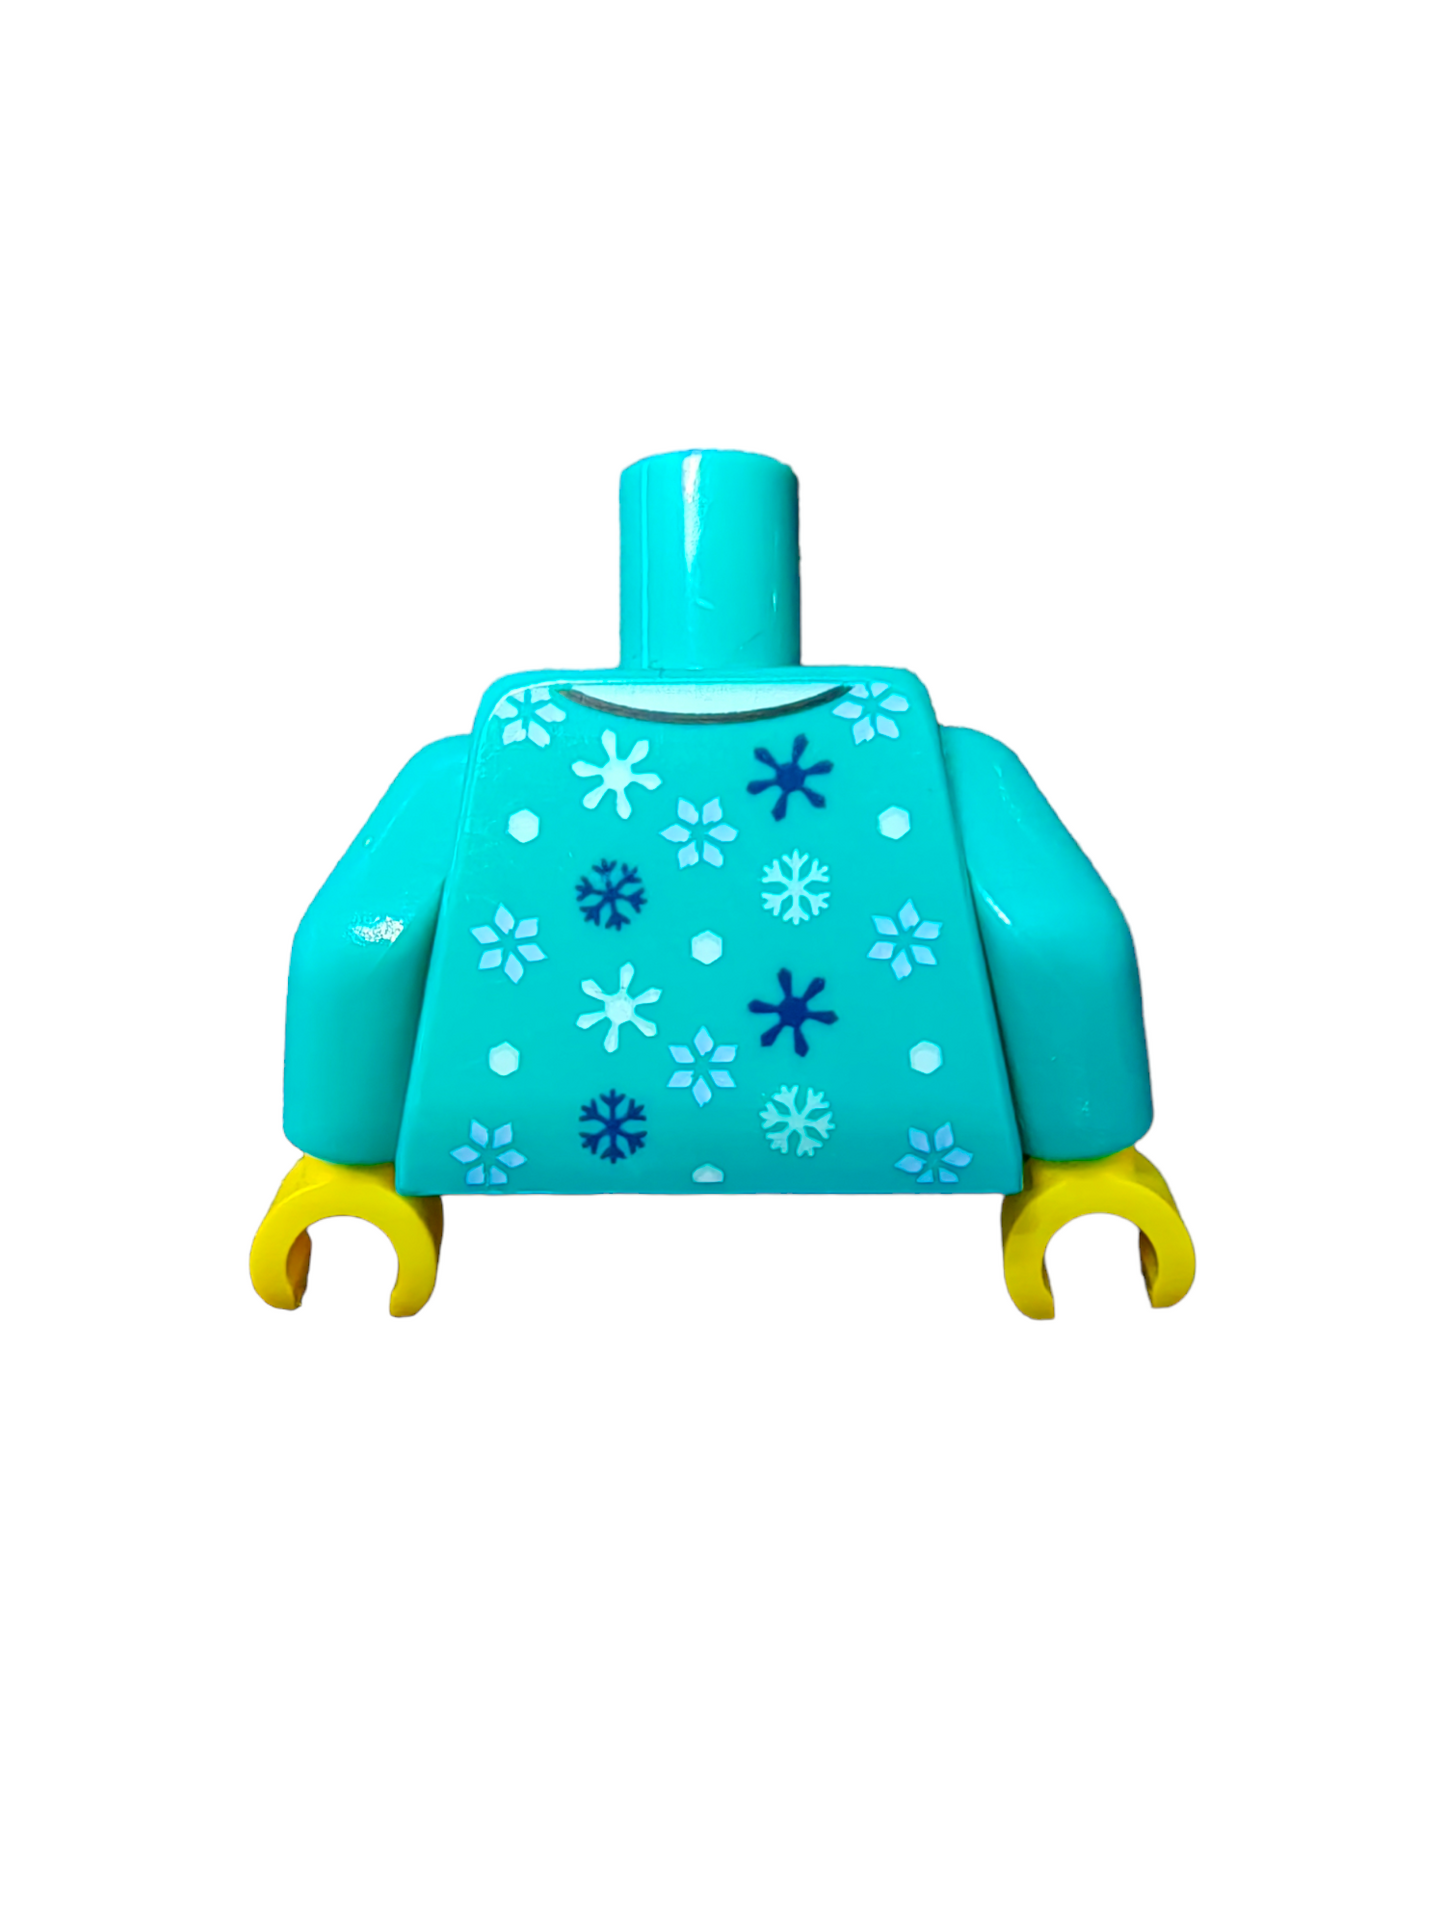 LEGO Torso, Pajamas with Buttons and Snowflakes - UB1145